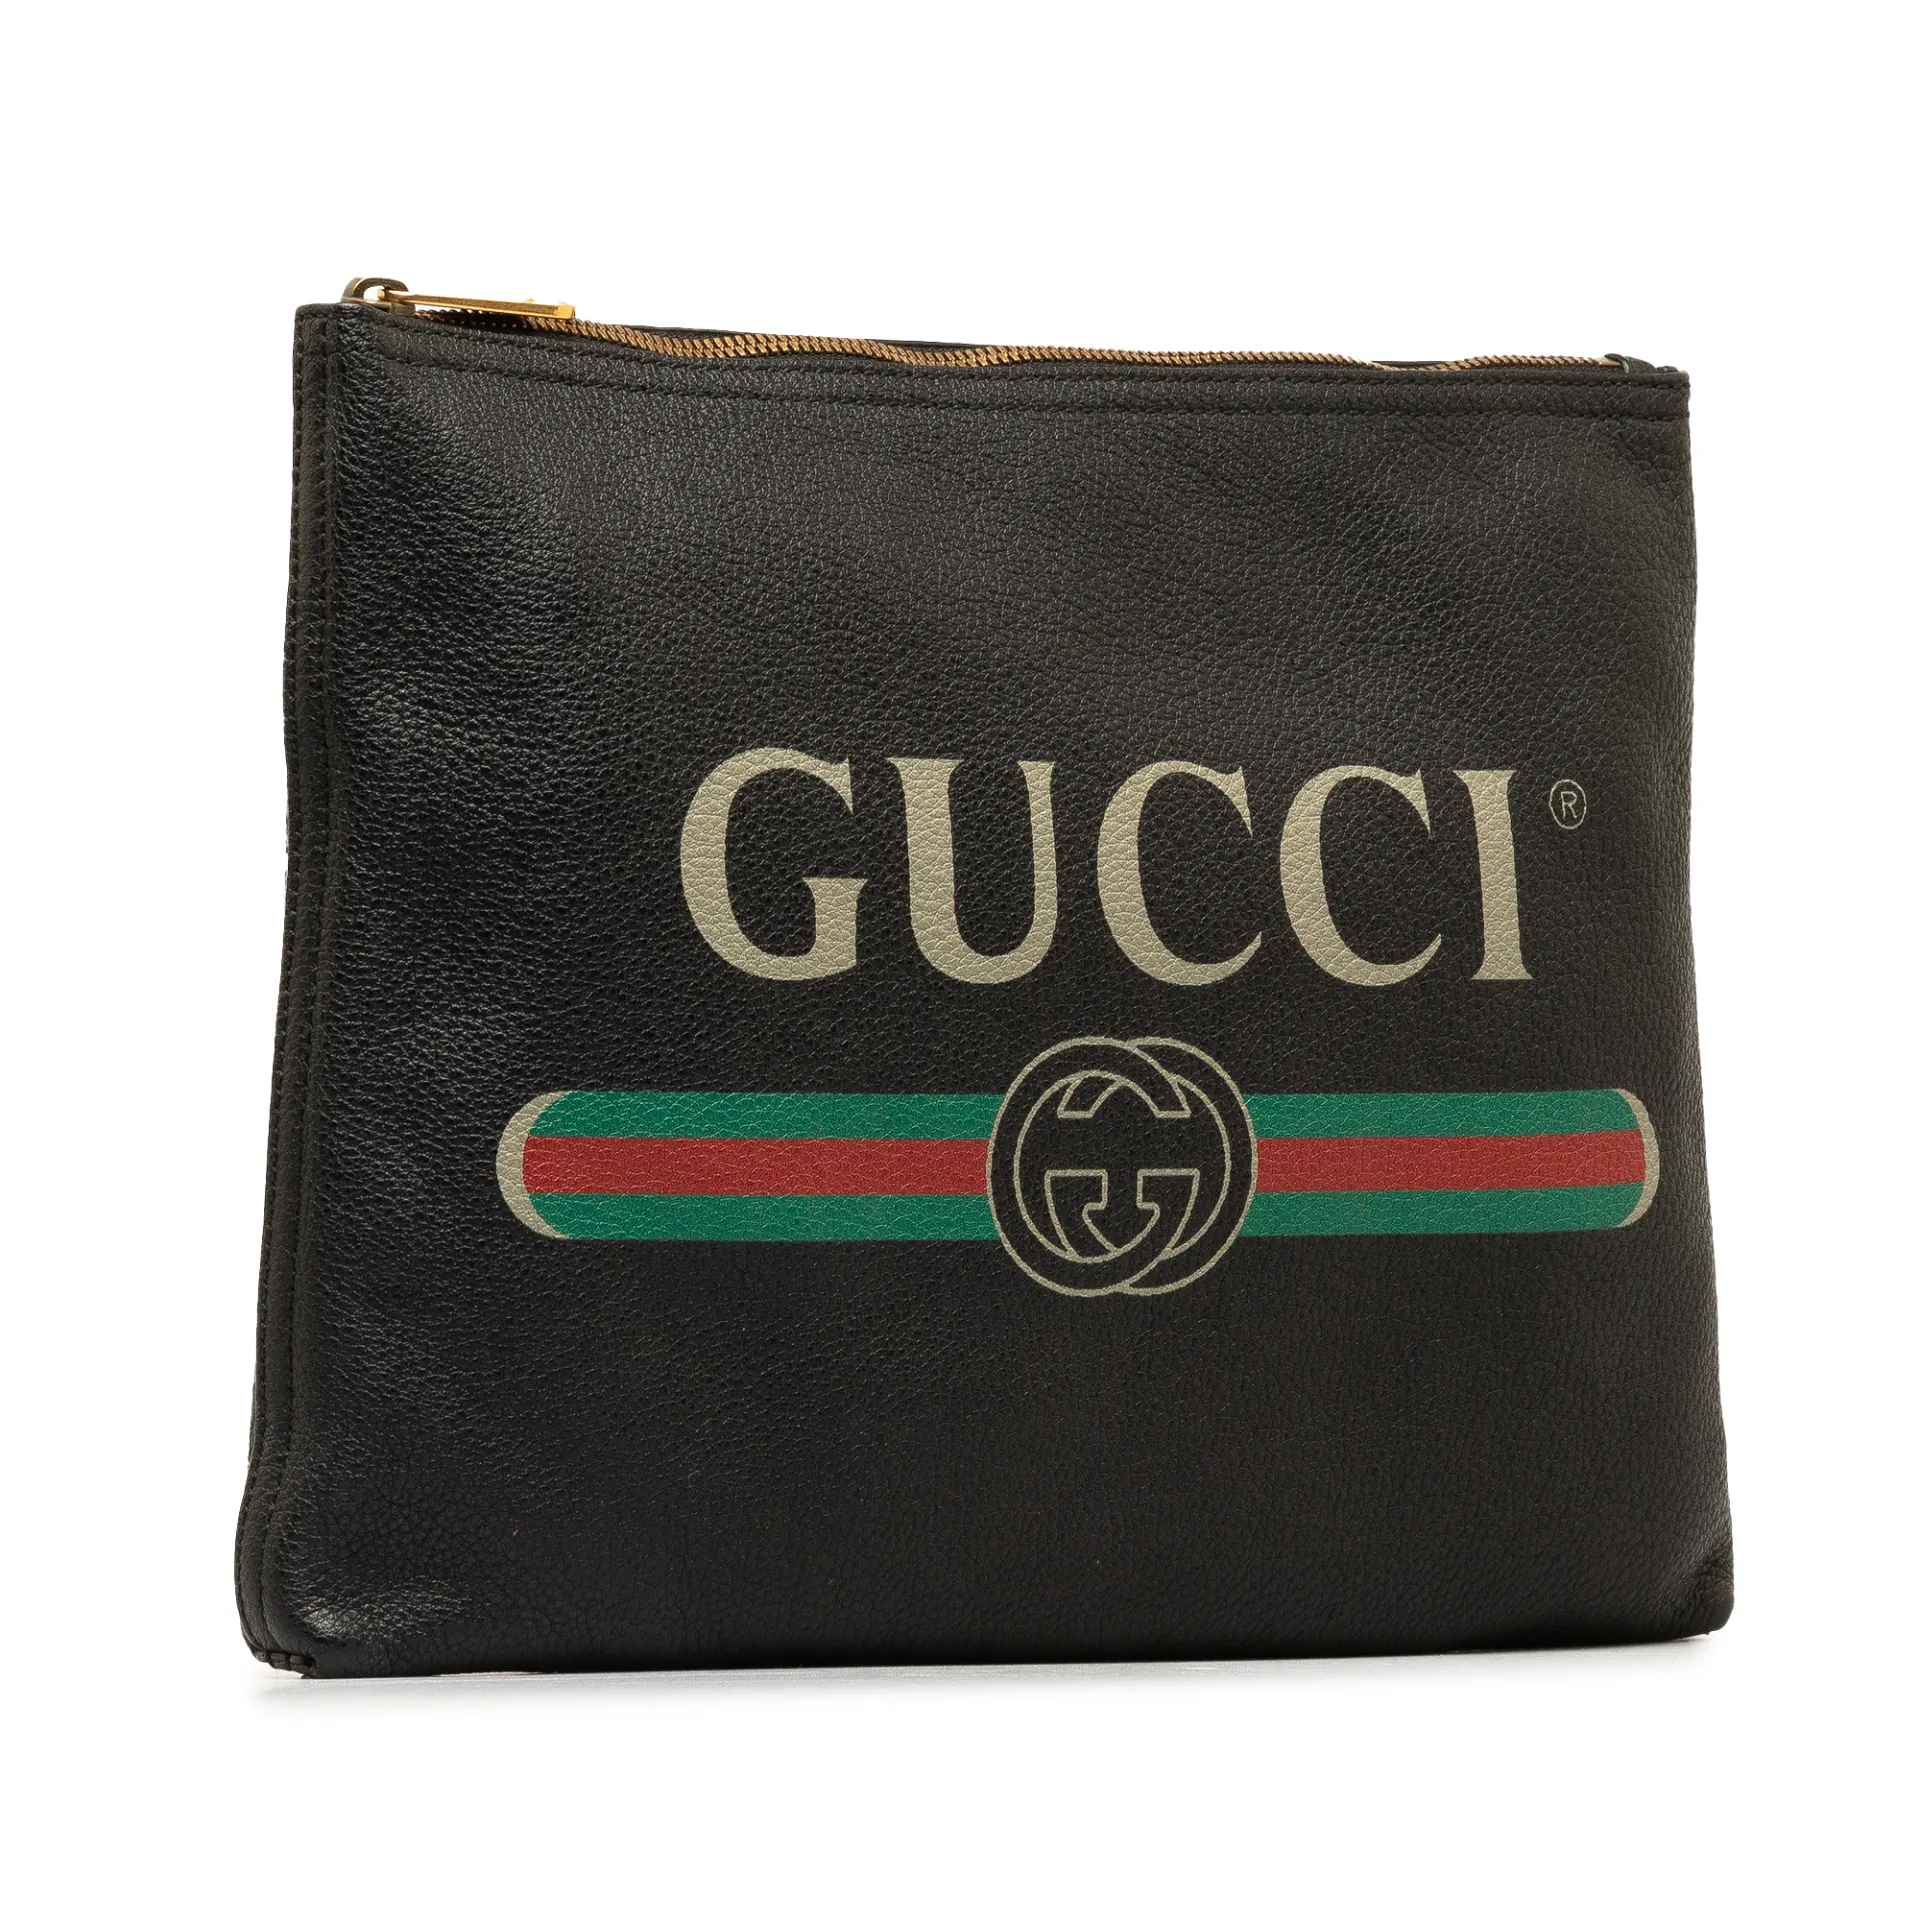 Gucci Leather Gucci Logo Clutch Bag